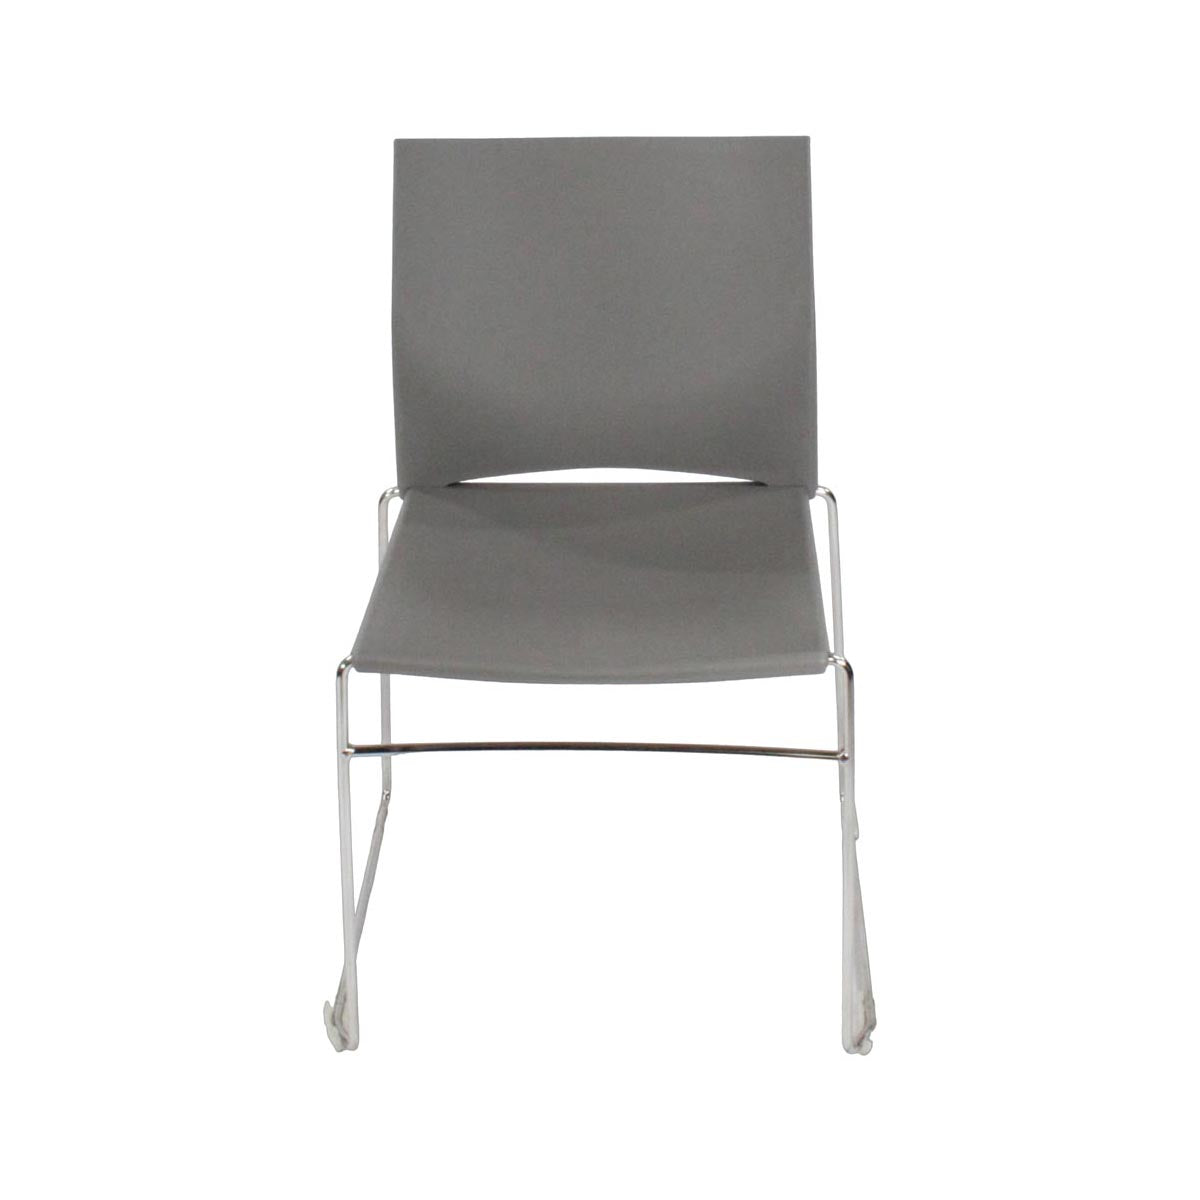 Herman Miller: sedia impilabile Pronta in grigio - rinnovata